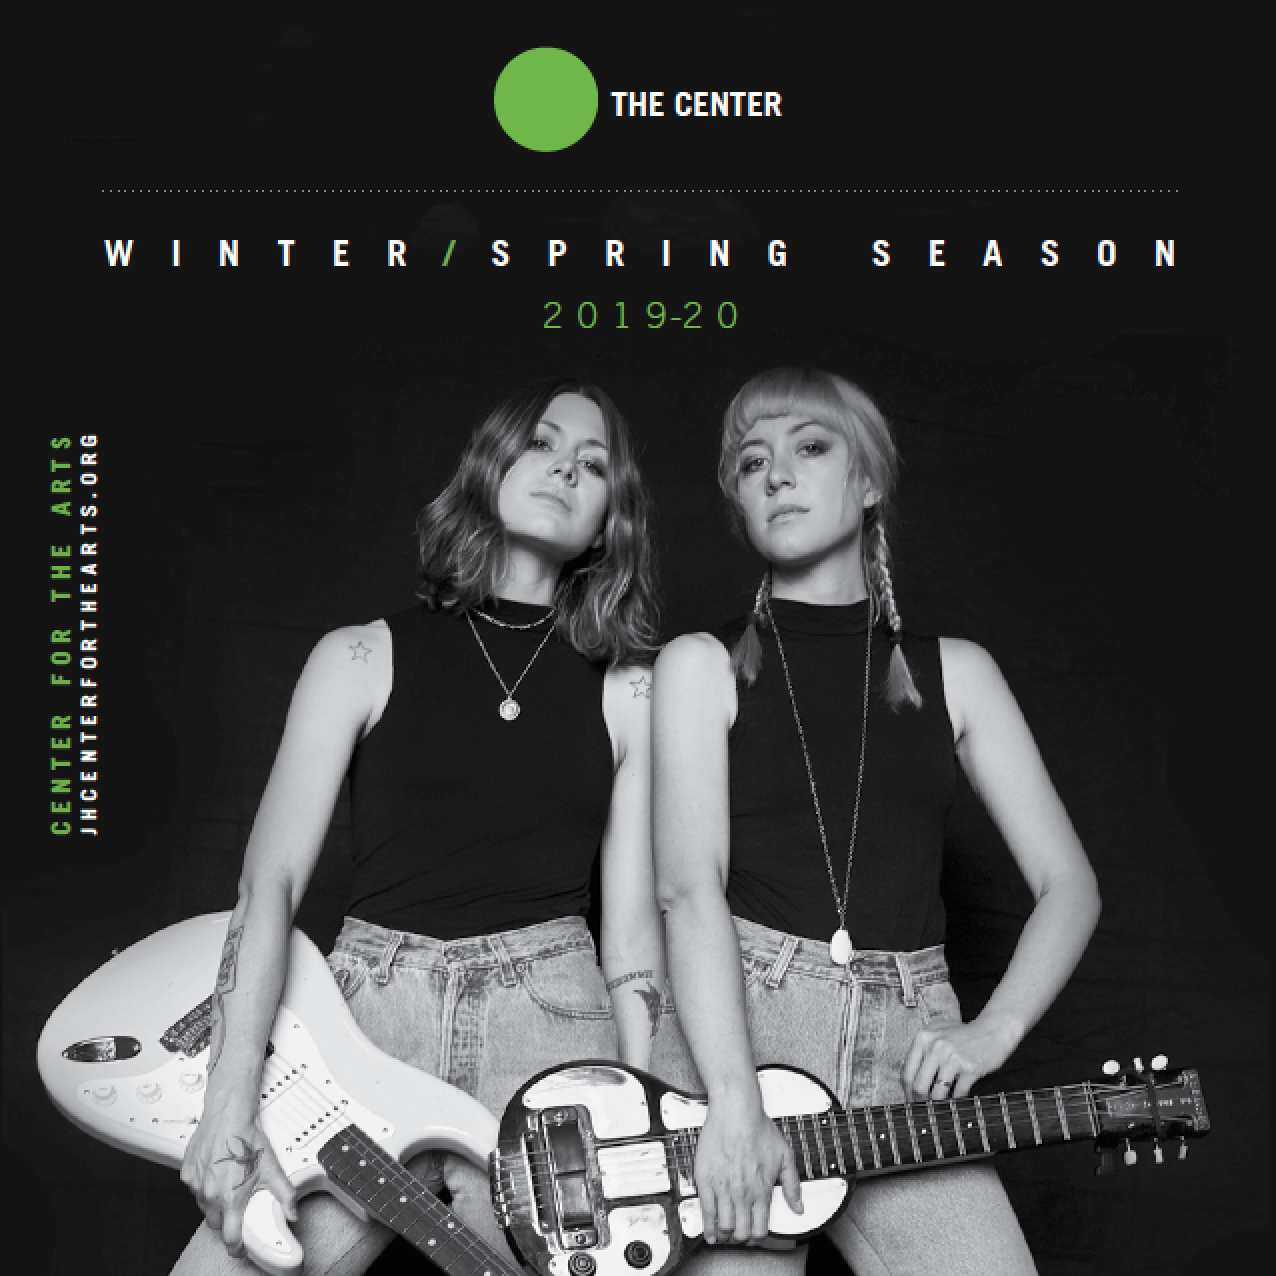 2019-2020 Winter/Spring season program cover